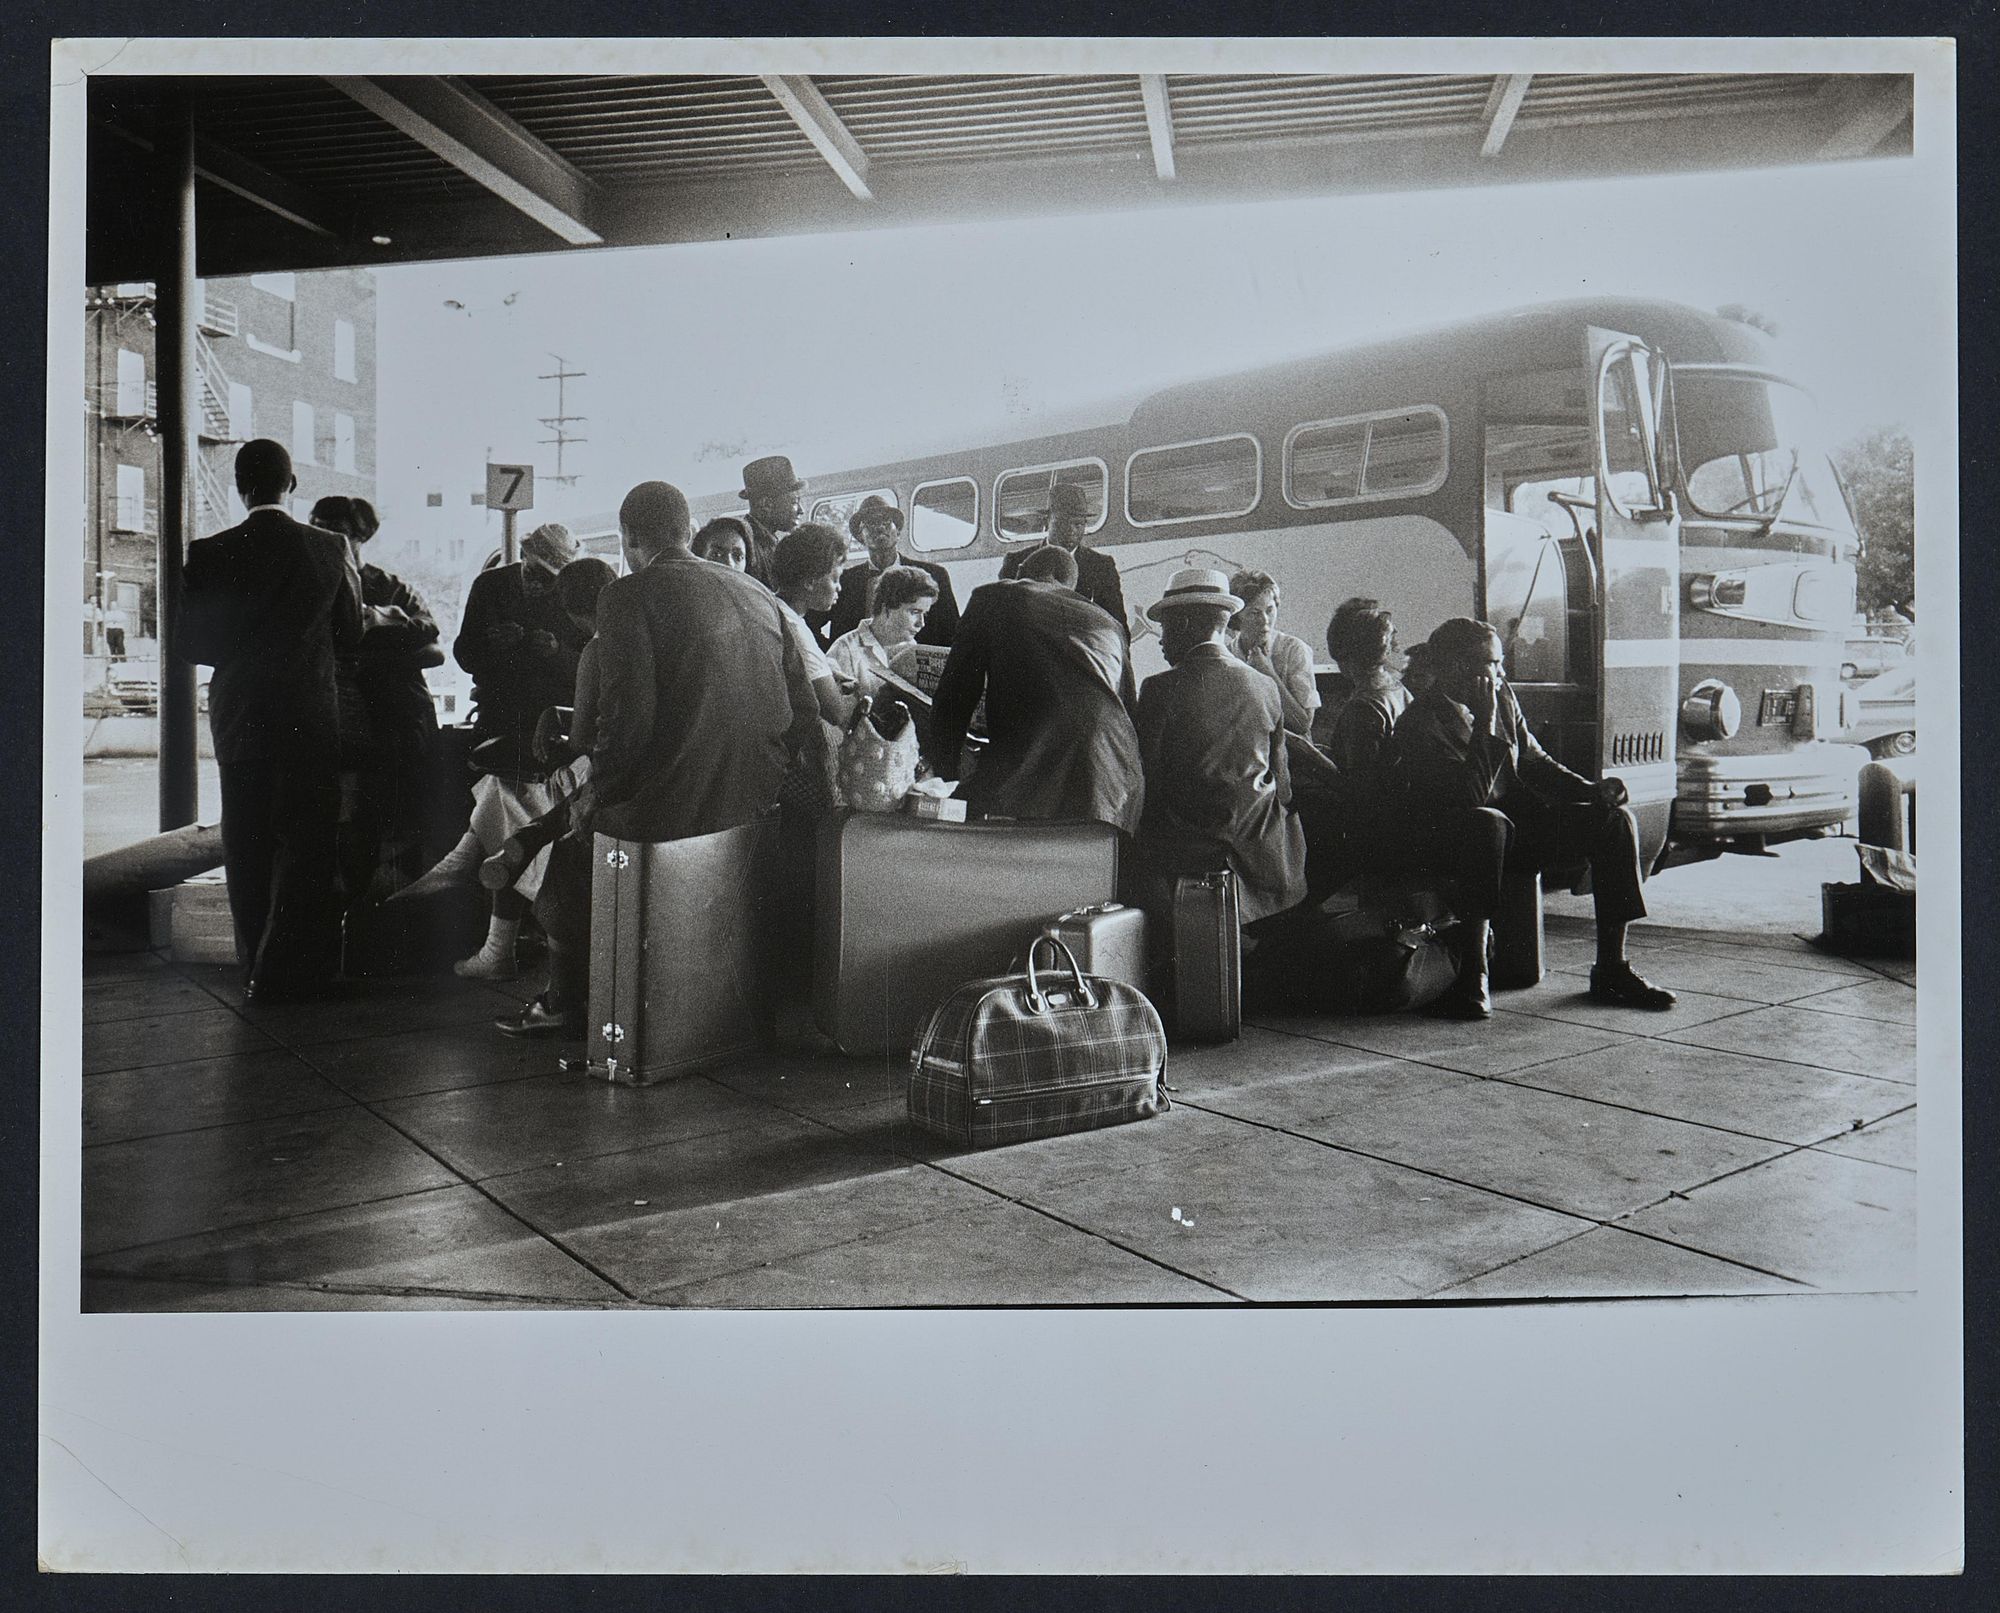 Freedom Riders waiting at Birmingham bus station, May 20, 1961, Photographer: Don Uhrbrock, LIFE Magazine